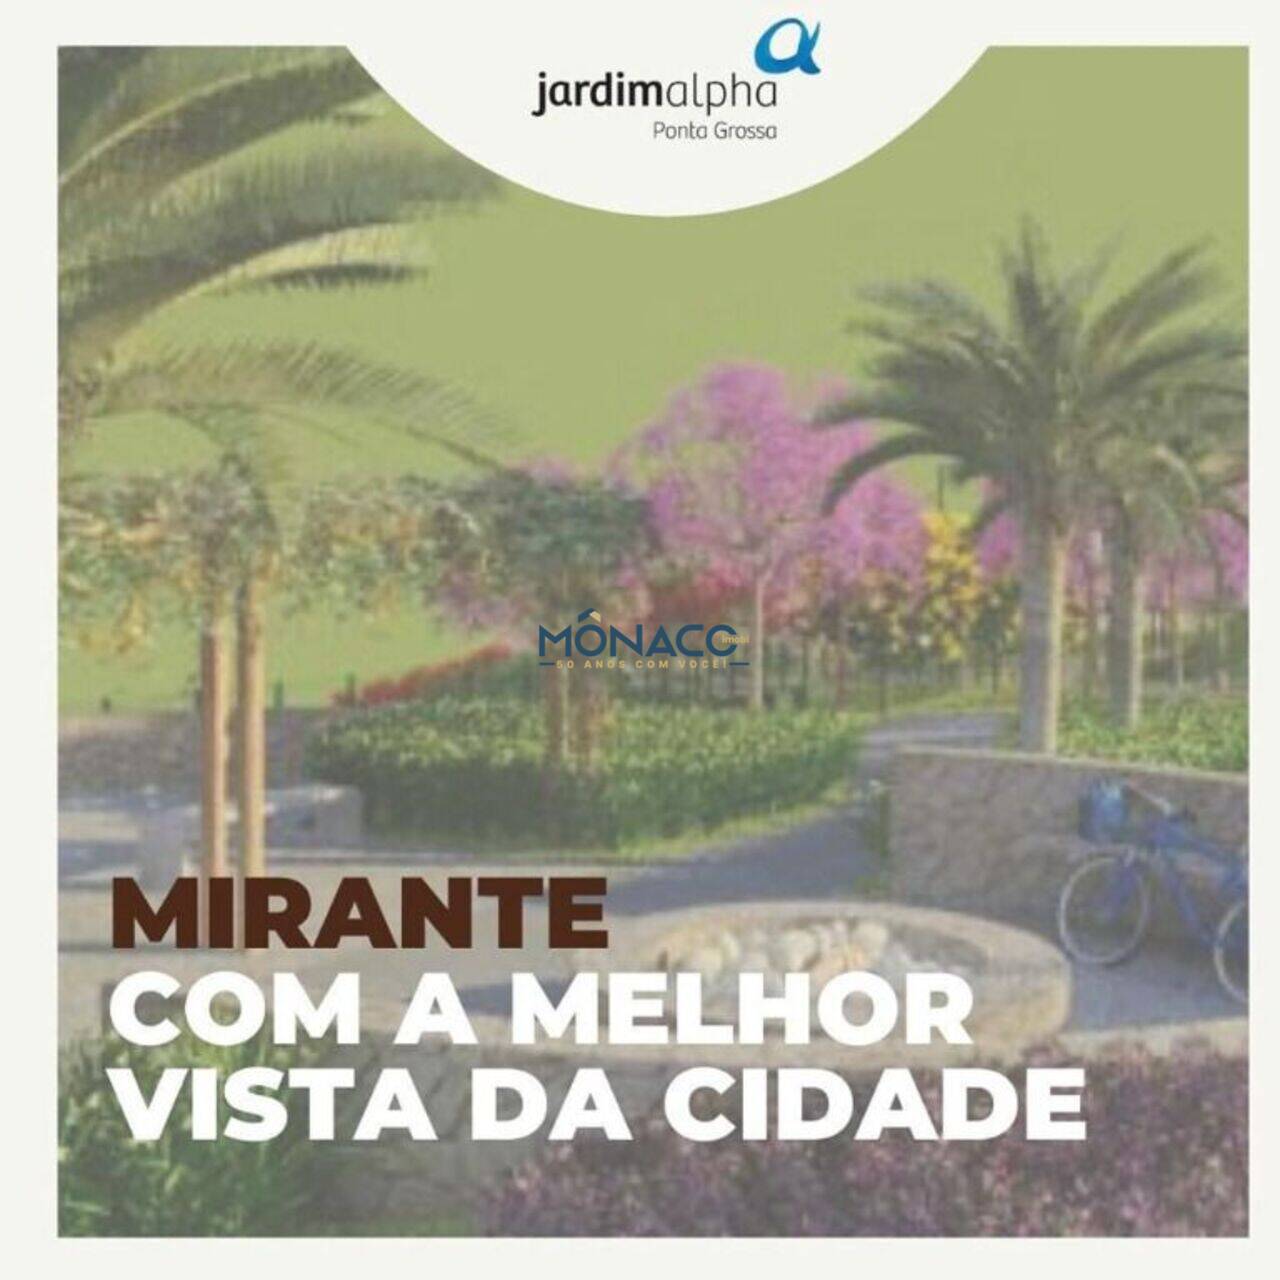 Terreno Jardim Carvalho, Ponta Grossa - PR